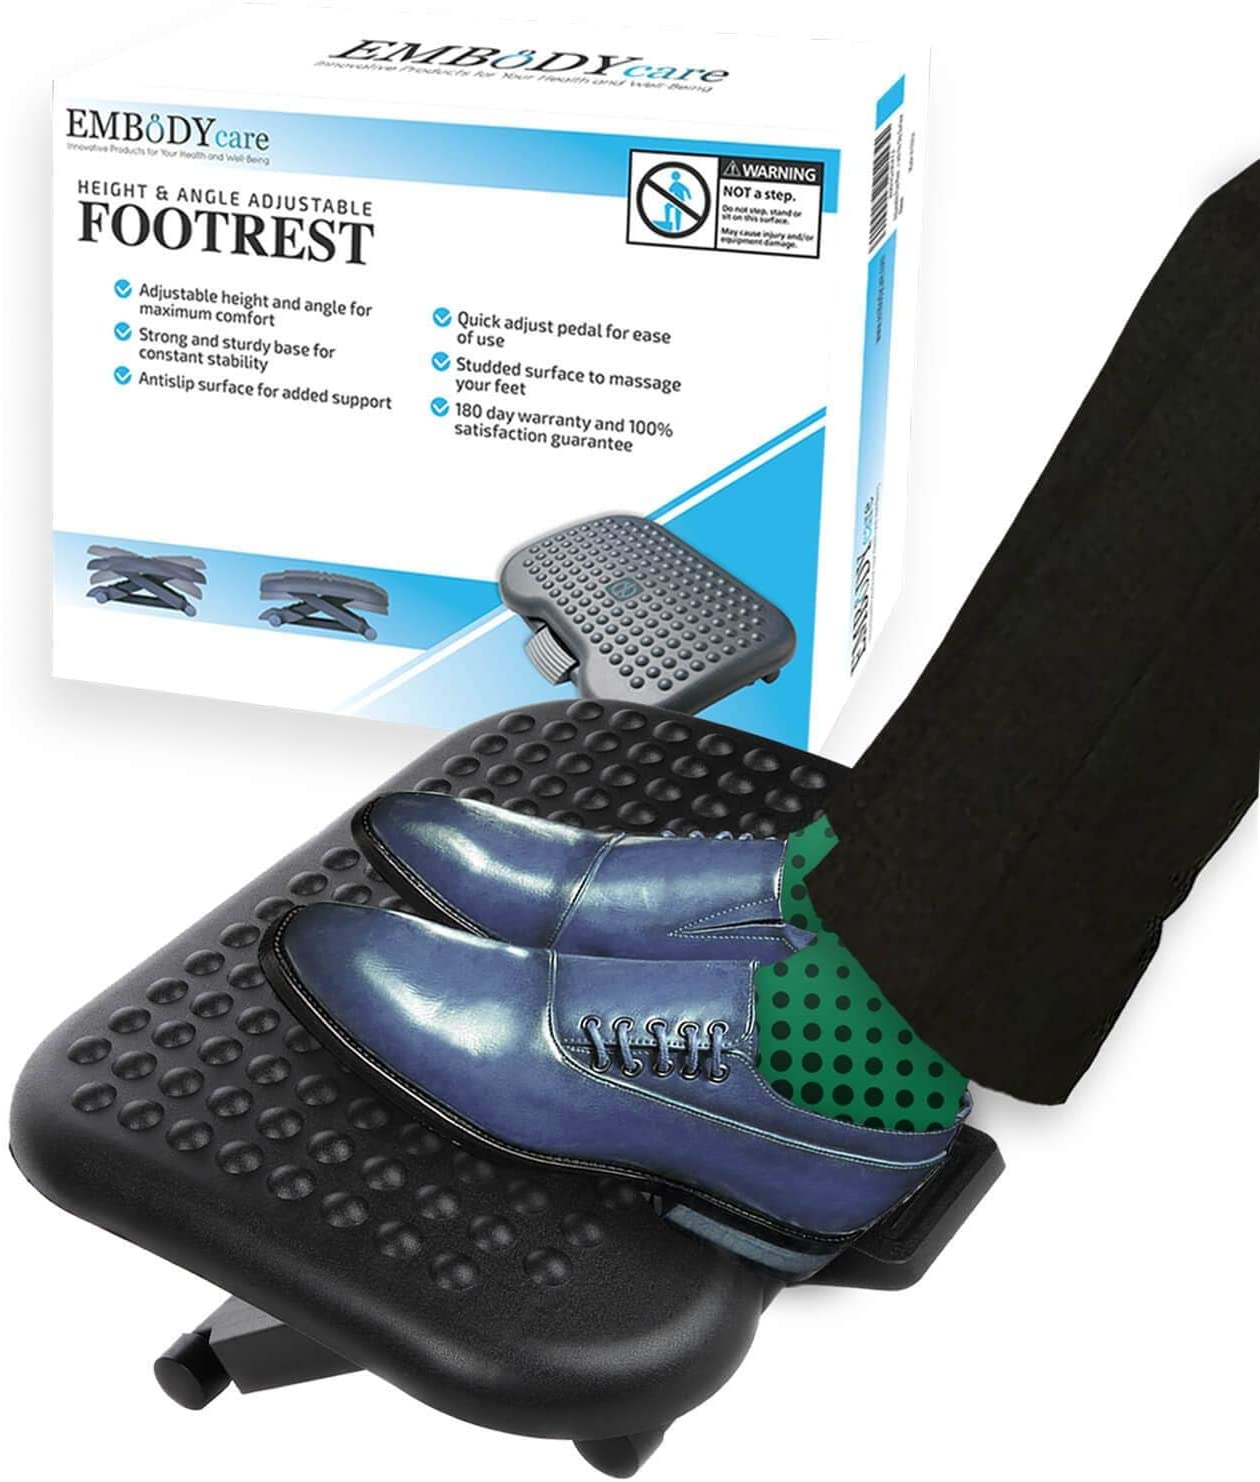 https://www.dontwasteyourmoney.com/wp-content/uploads/2020/05/embody-care-adjustable-ergonomic-under-desk-footrest-under-desk-footrest.jpg